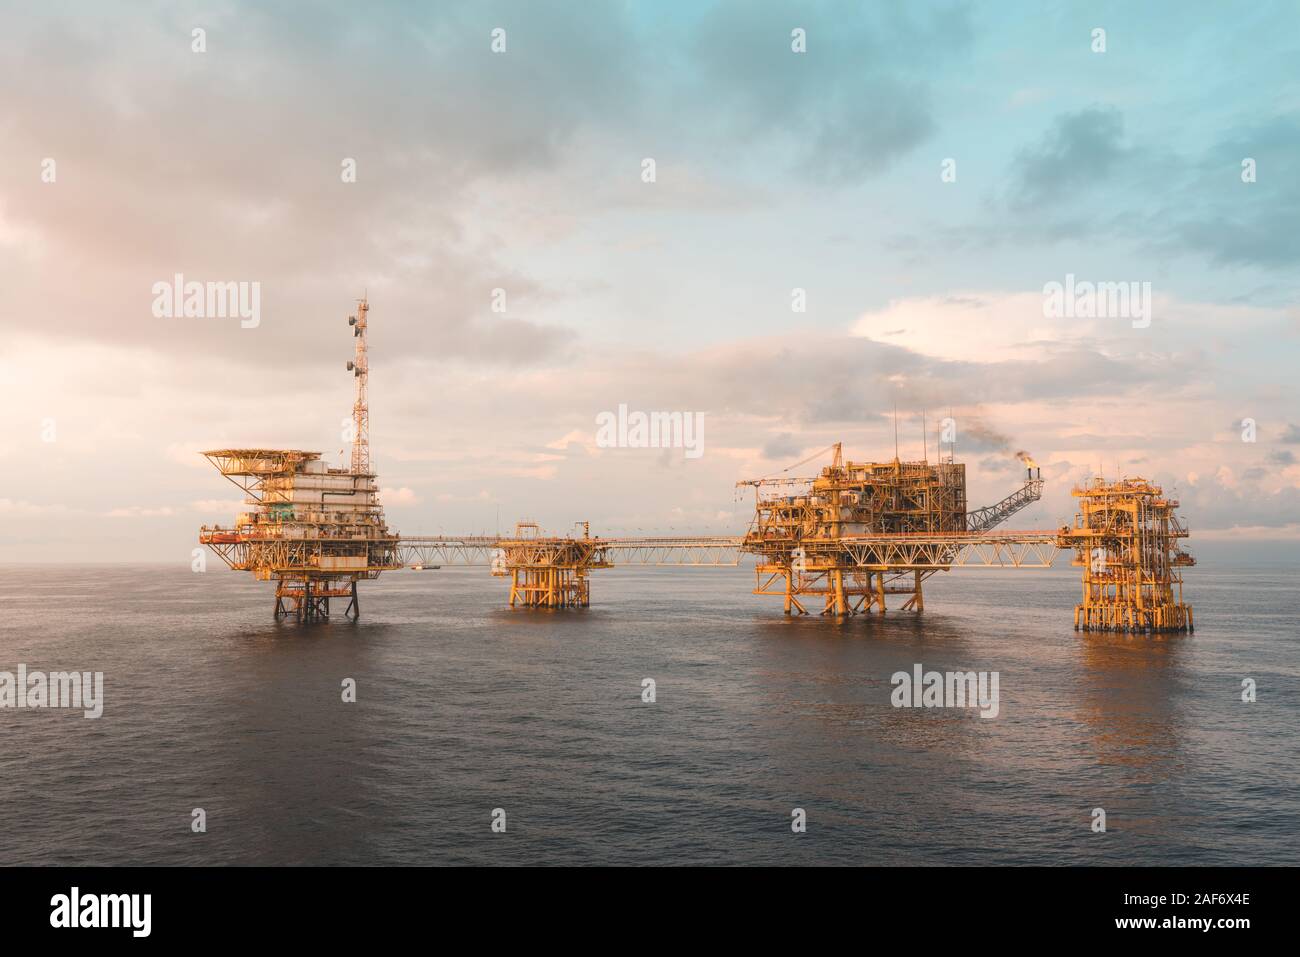 Massive offshore oil production platform Stock Photo